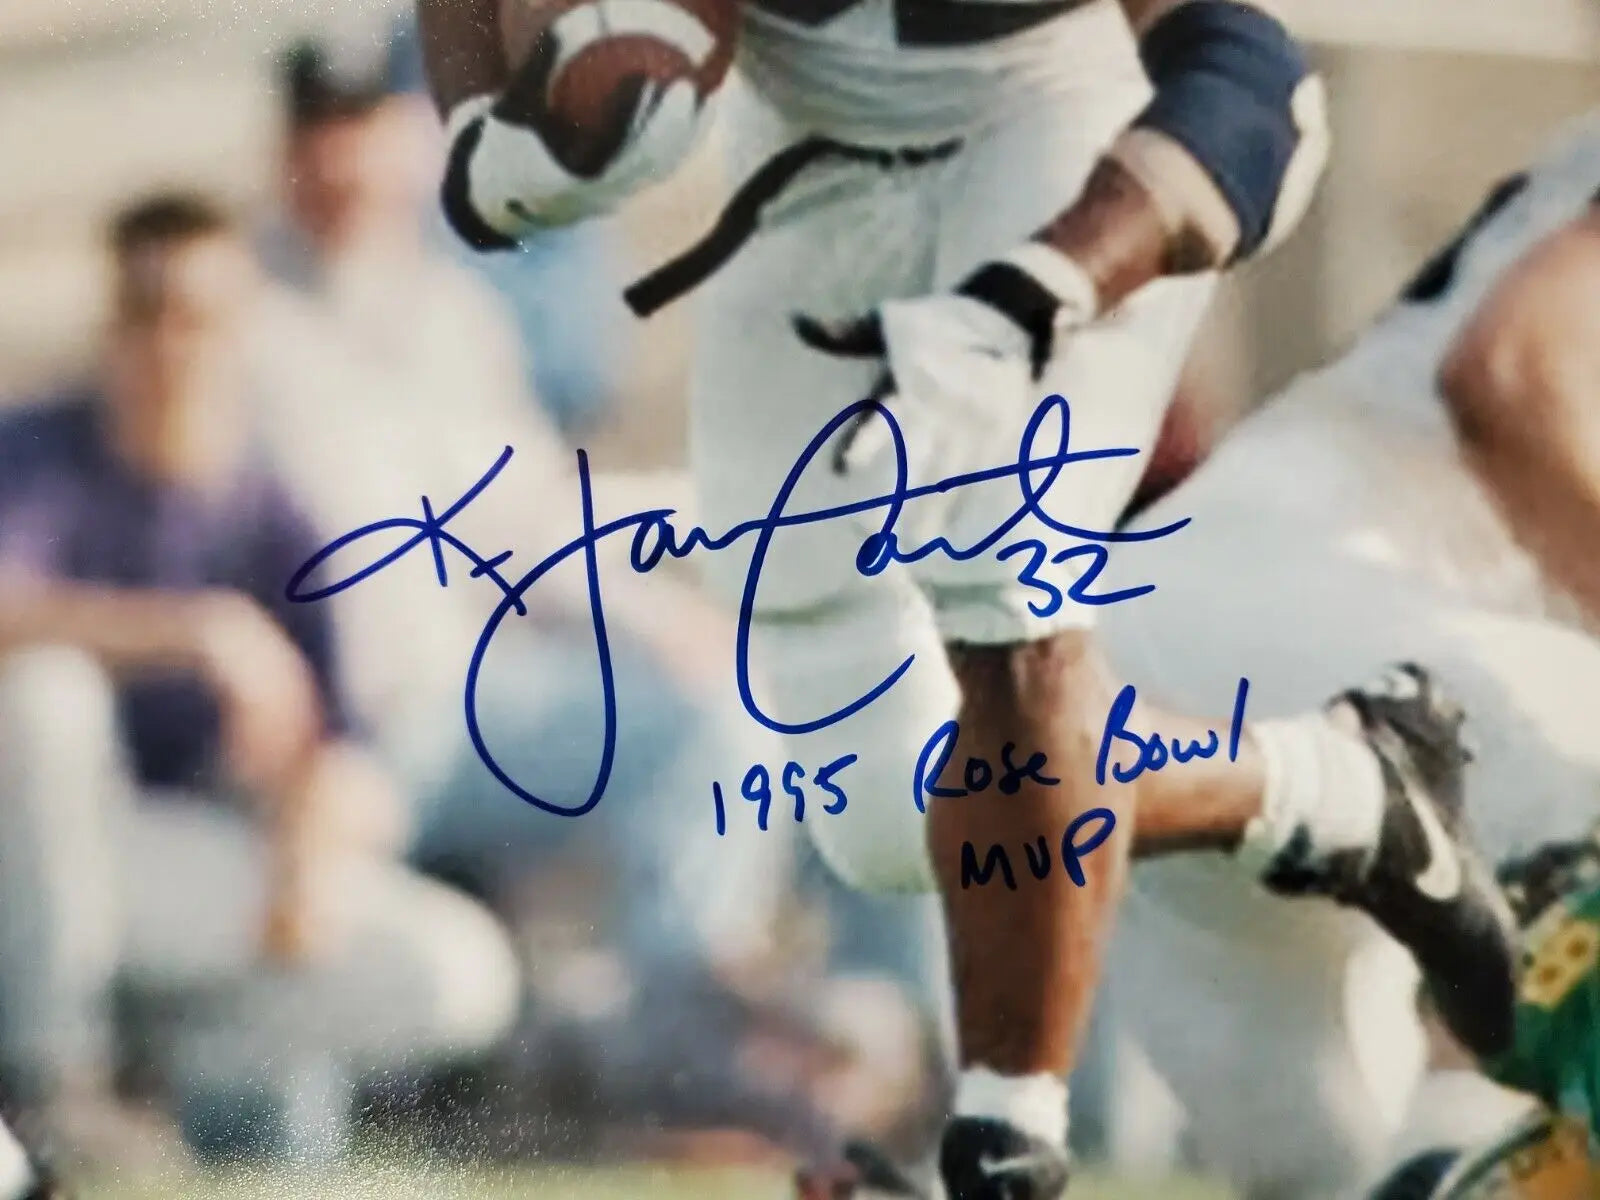 MVP Authentics Ki-Jana Carter Autographed Signed Inscribed Penn State 16X20 Photo Jsa Coa 117 sports jersey framing , jersey framing